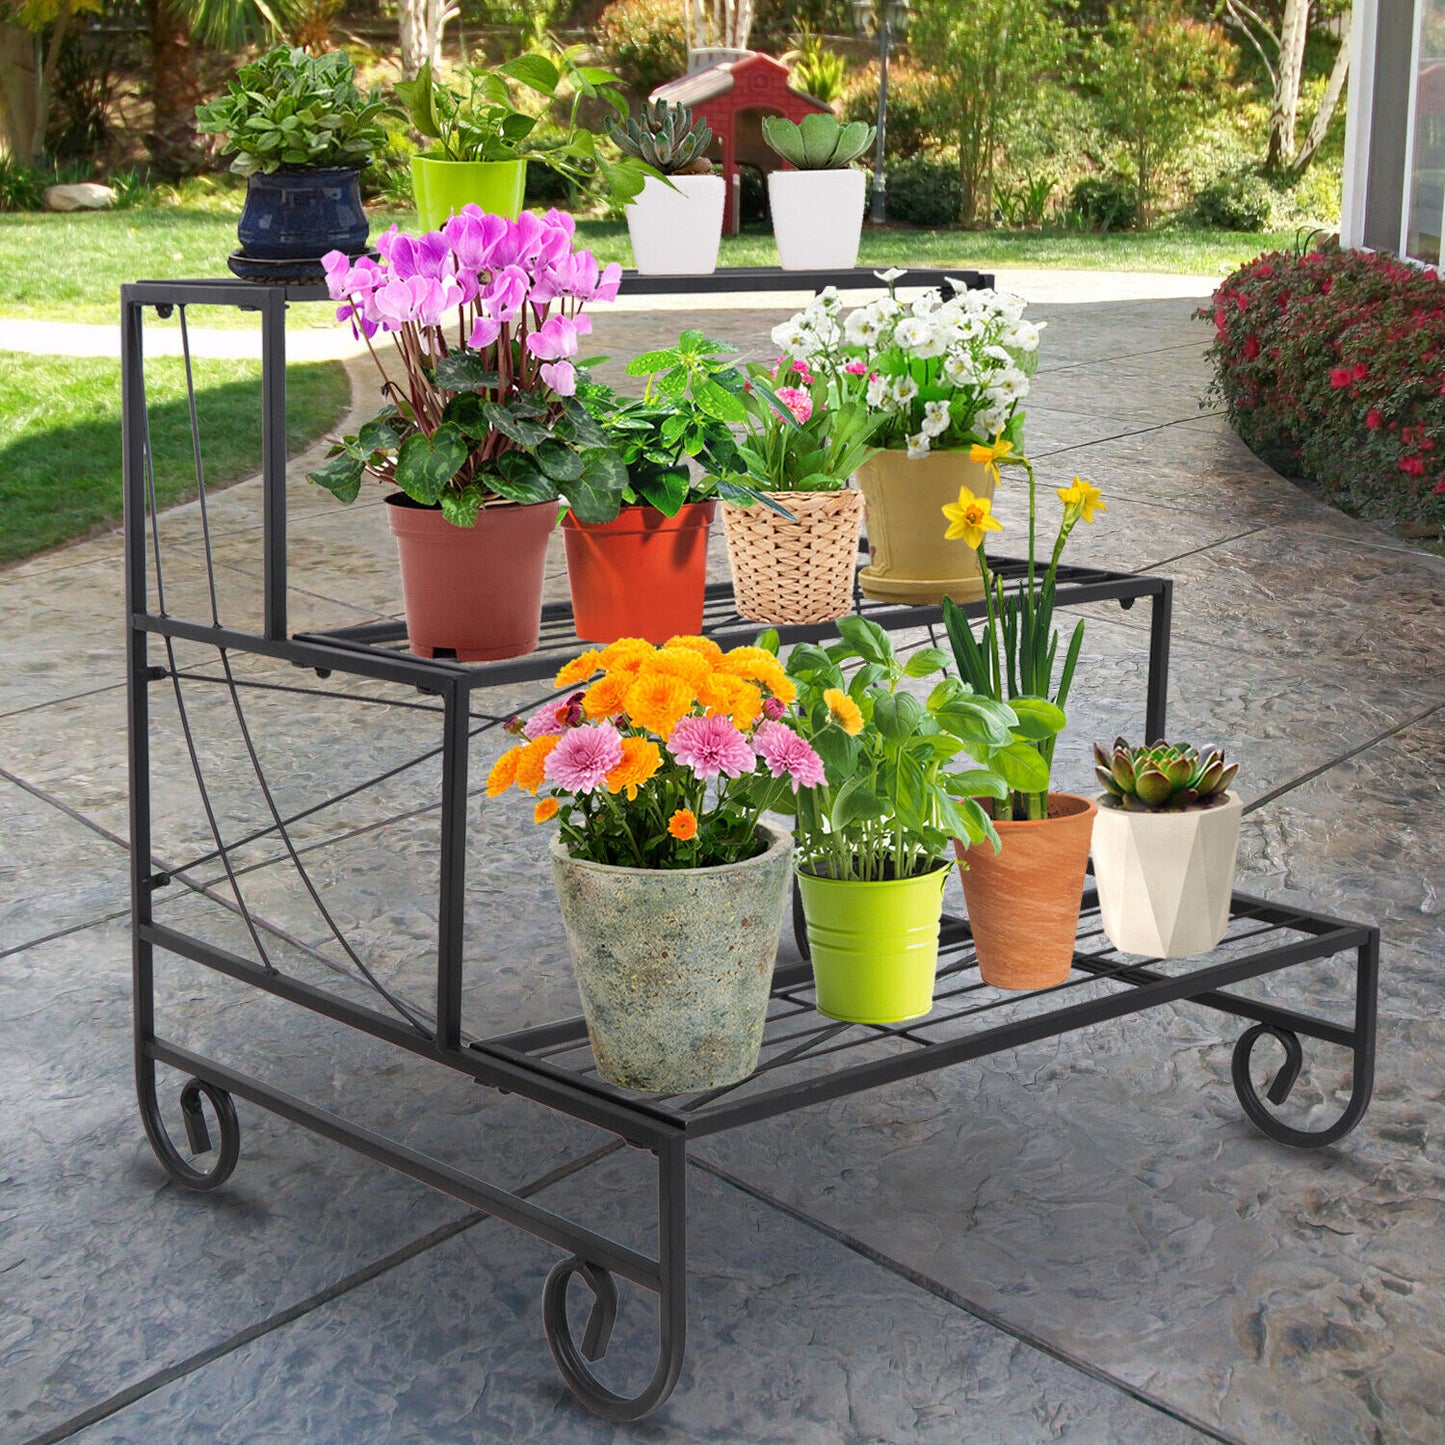 3 Tier Metal Plant Stand Garden Decorative Planter Holder Flower Pot Shelf Rack